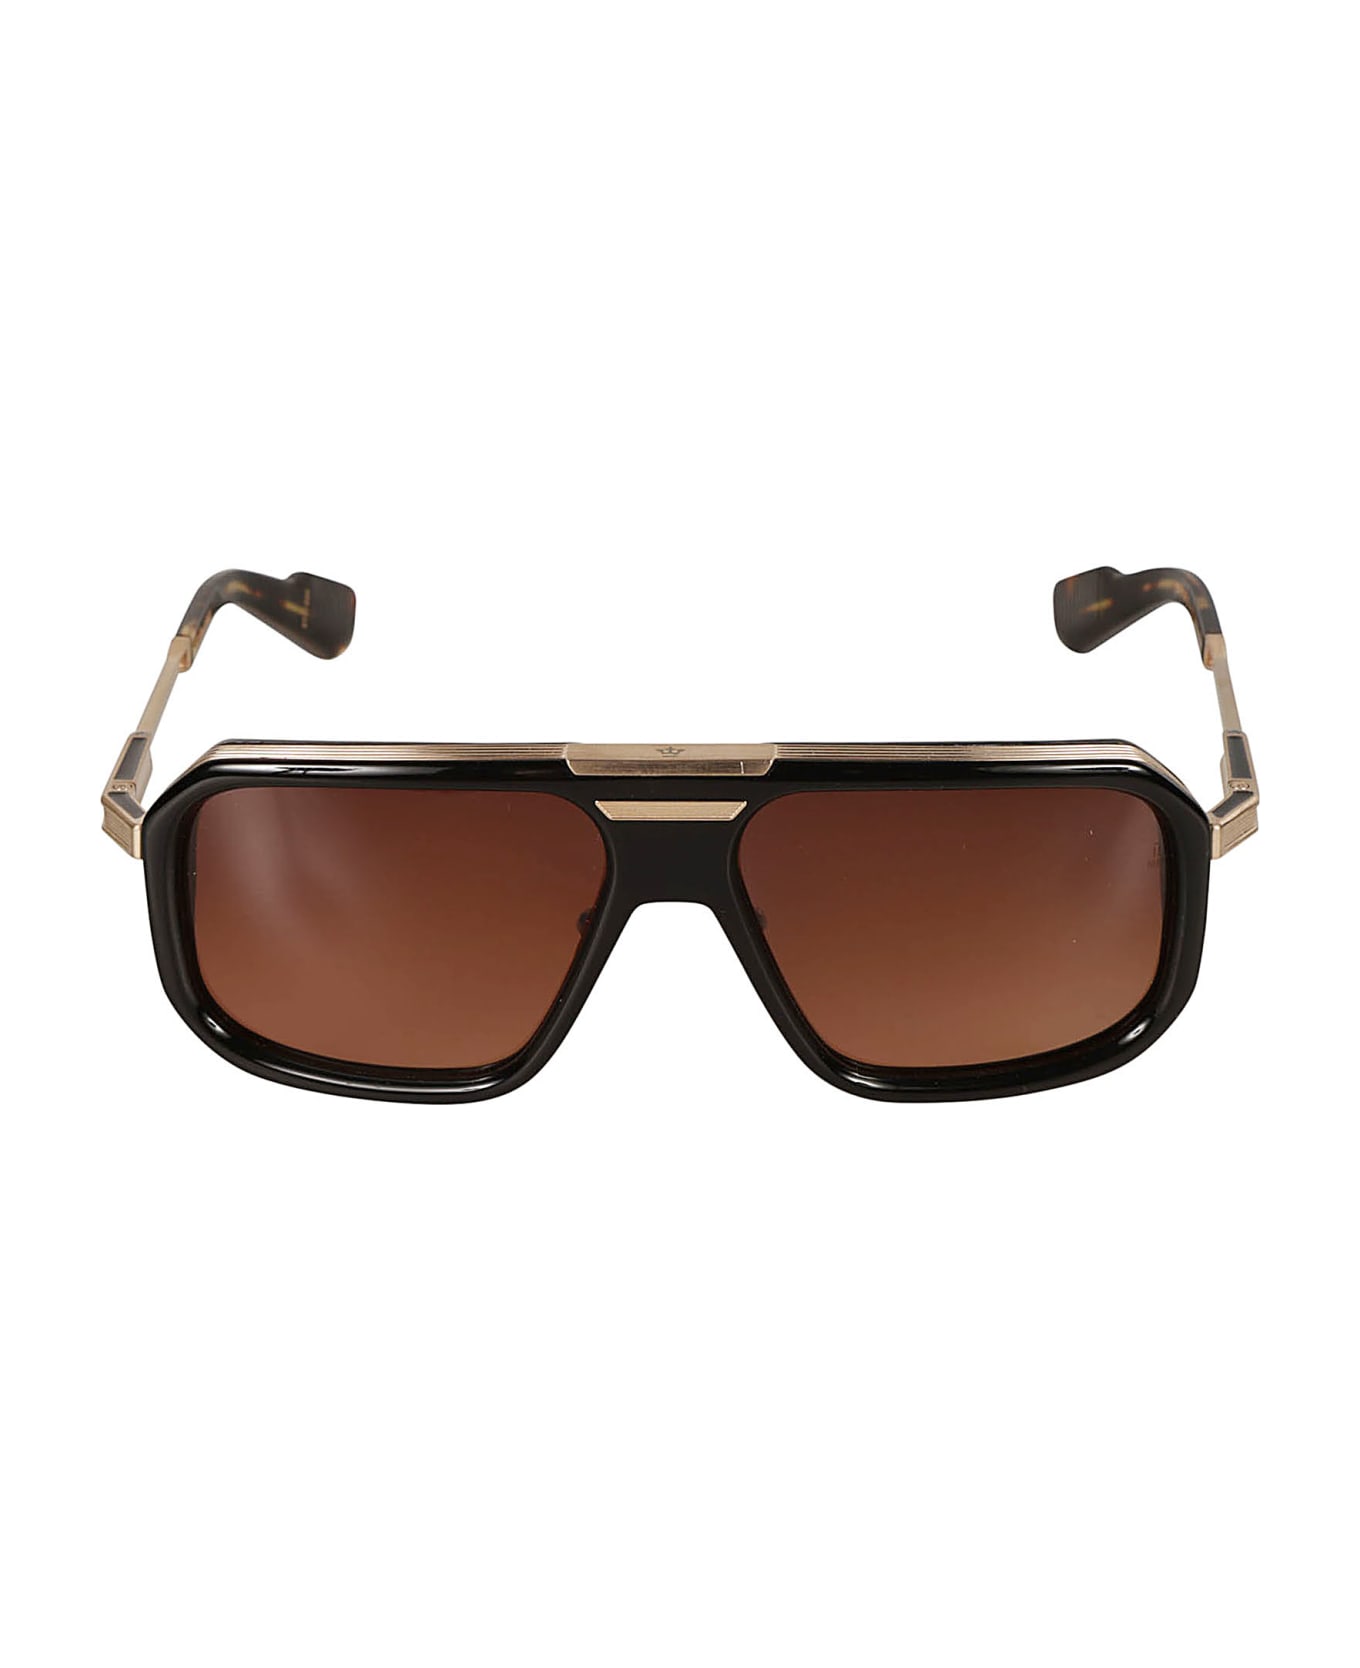 Jacques Marie Mage Donohu Sunglasses Sunglasses - Black